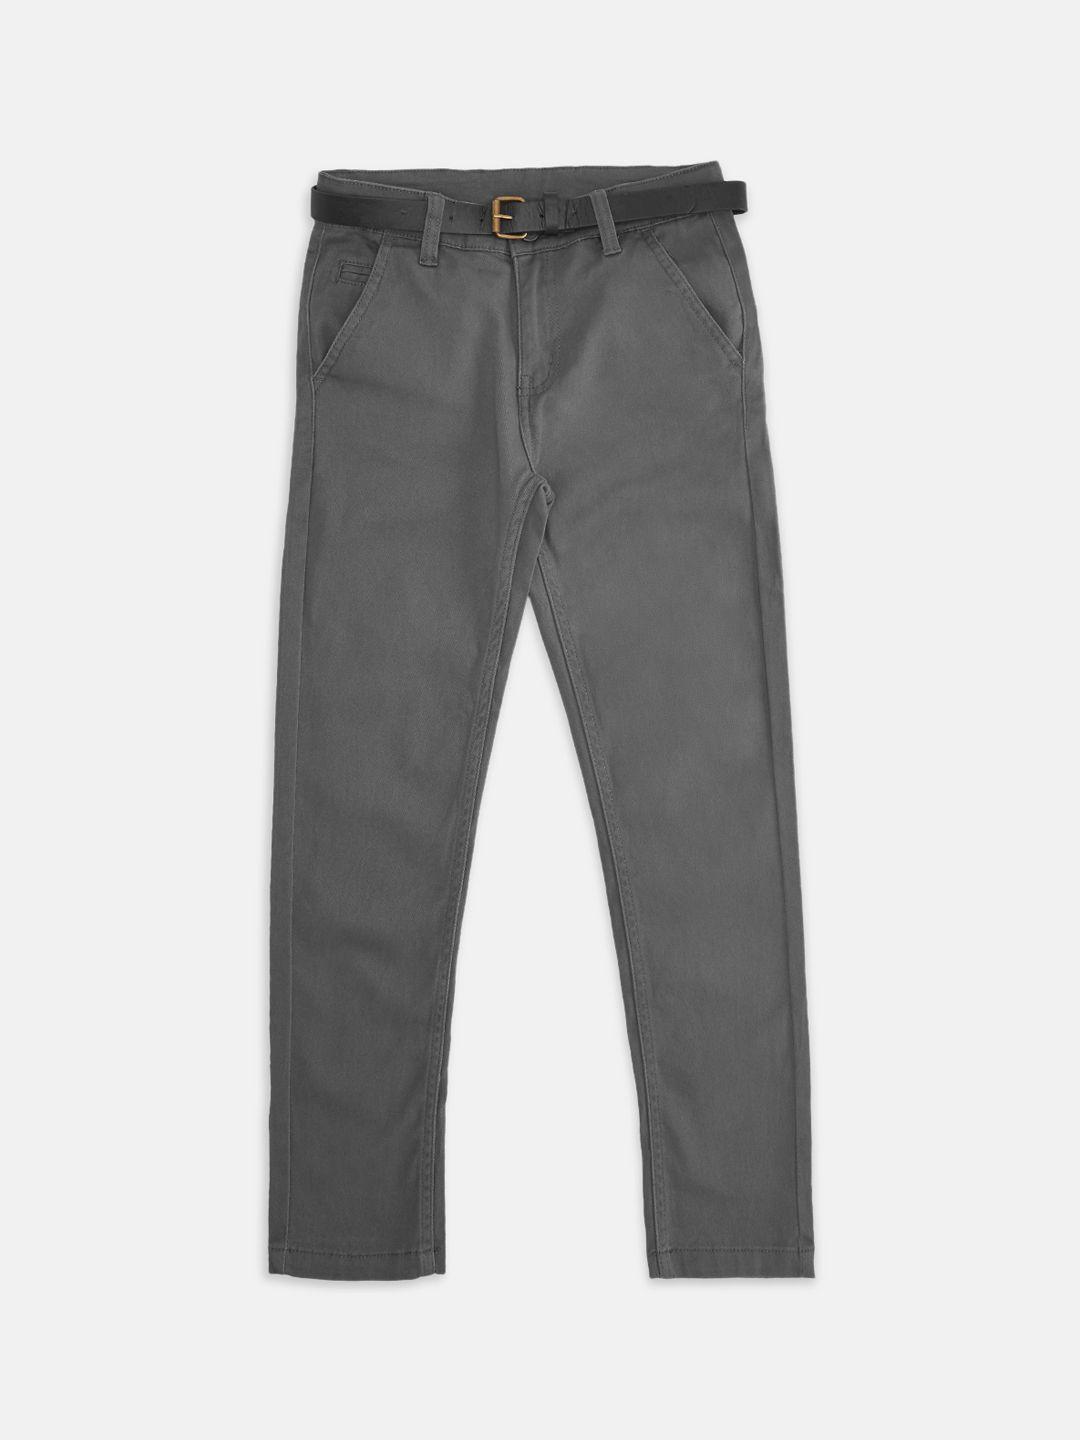 pantaloons junior boys grey cotton chinos trousers